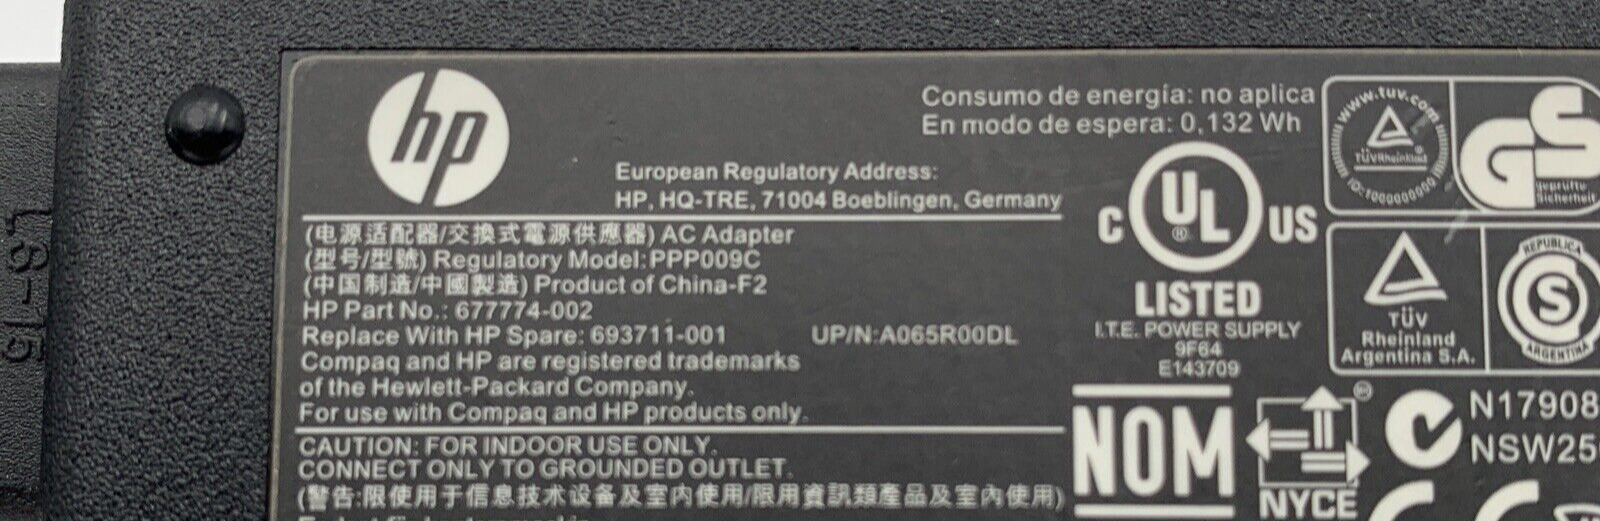 Hewlett Packard AC Power Adapter 677774-002 Genuine HP Tested